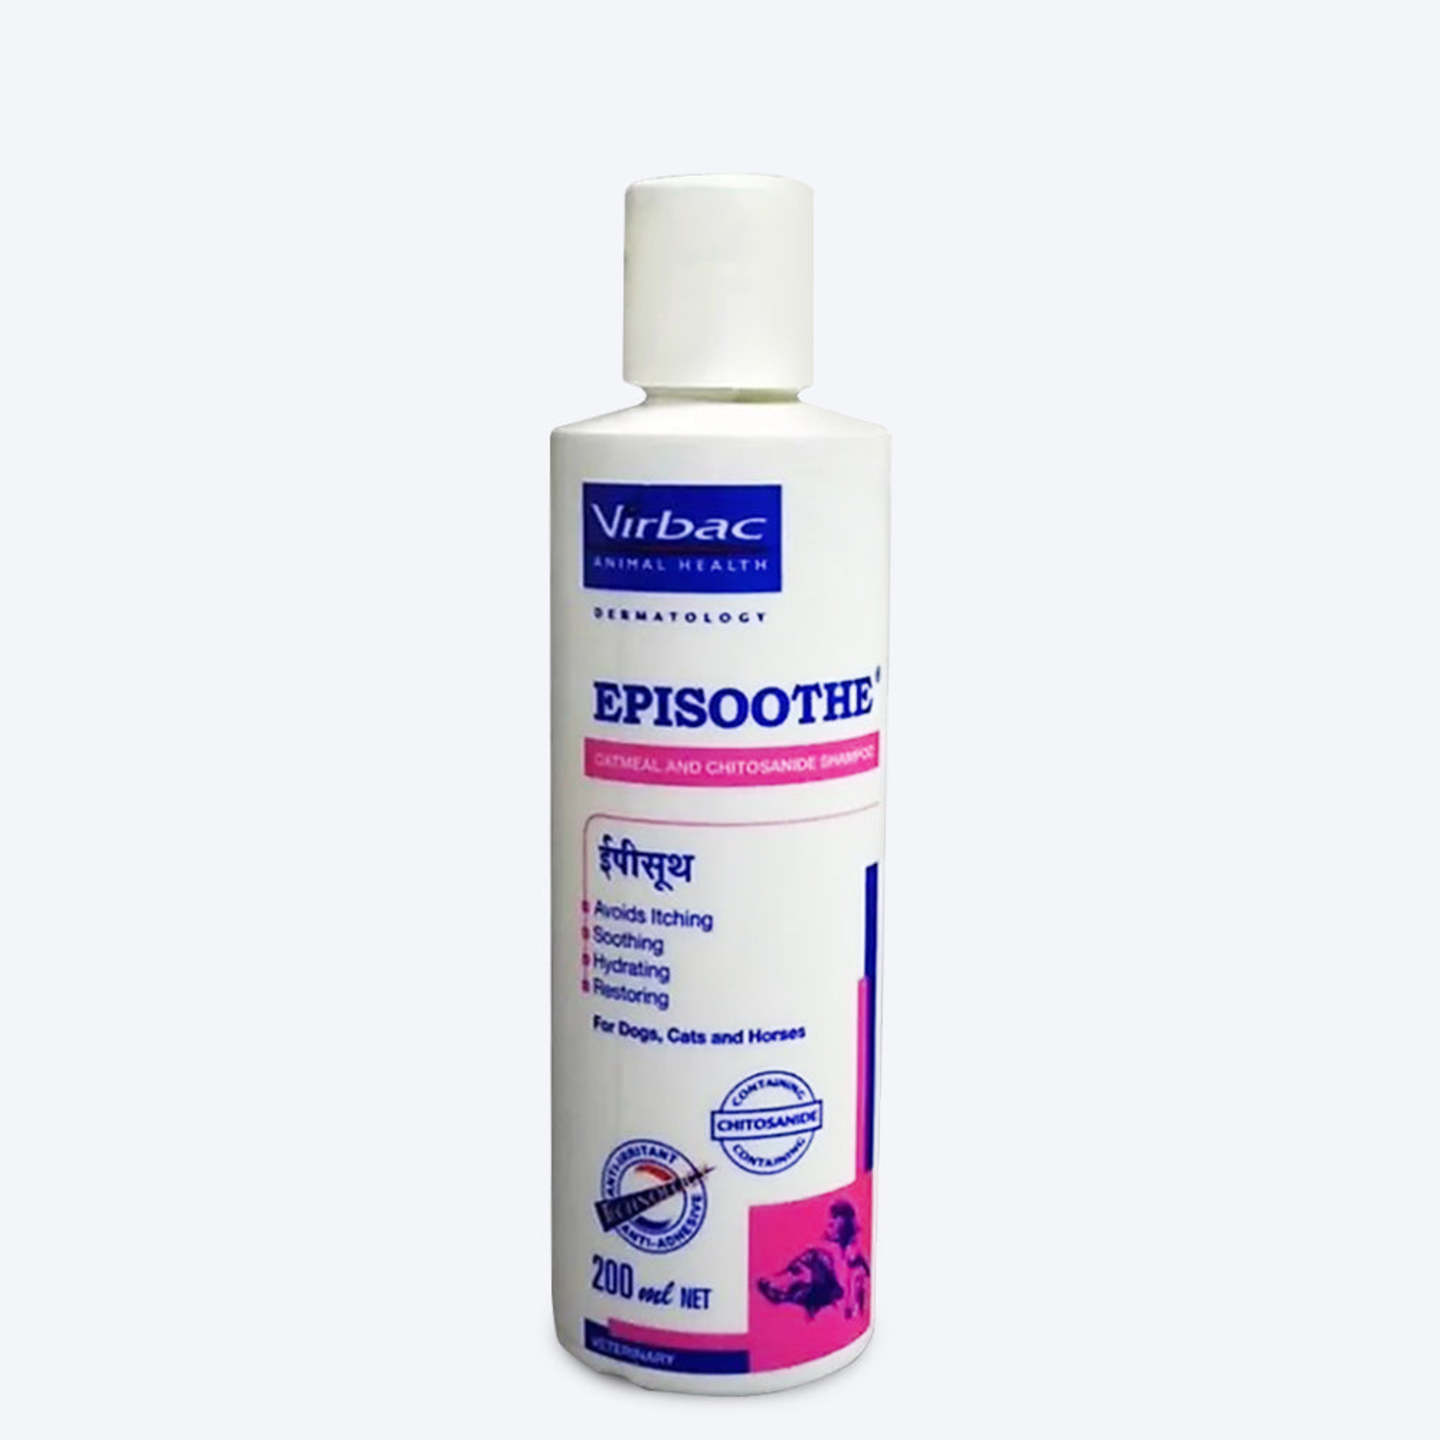 Virbac Episoothe Dog & Cat Shampoo - 200 ml Natural, anti-irritant, anti-adhesive & ideal for sensitive skin